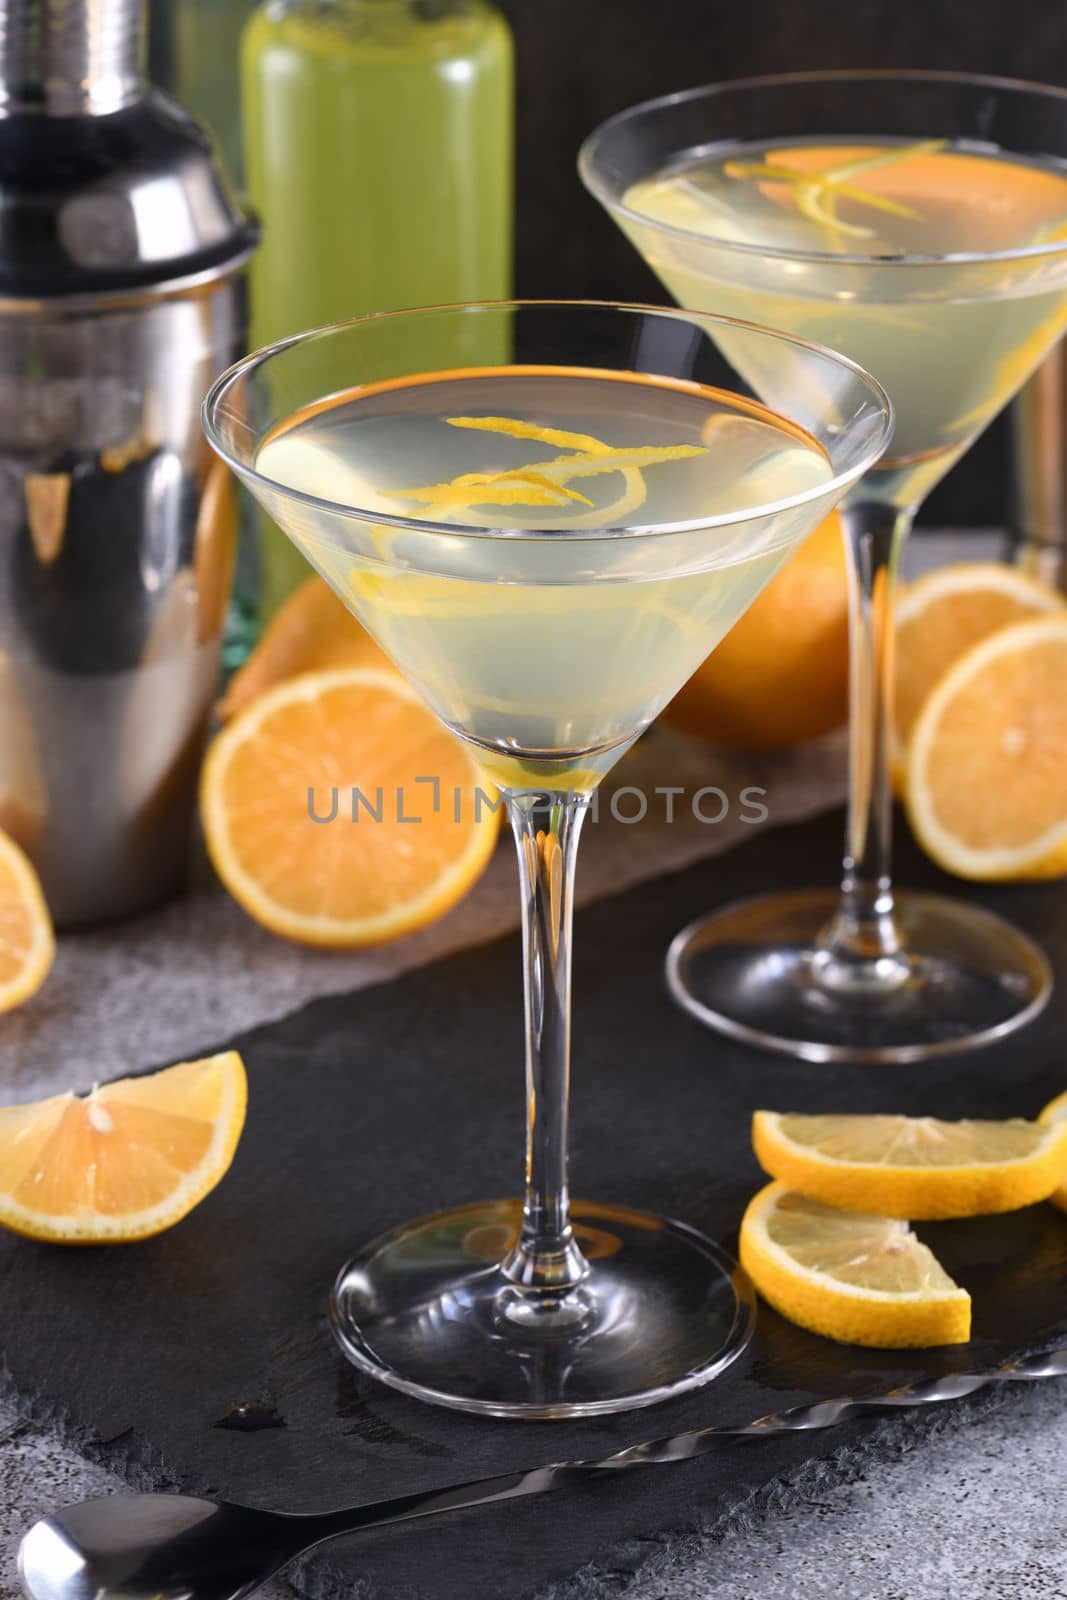 Lemon drop martini with zest offers a sophisticated twist to a cocktail. This light and savory favorite combines vodka, orange liqueur, fresh lemon juice and zest.